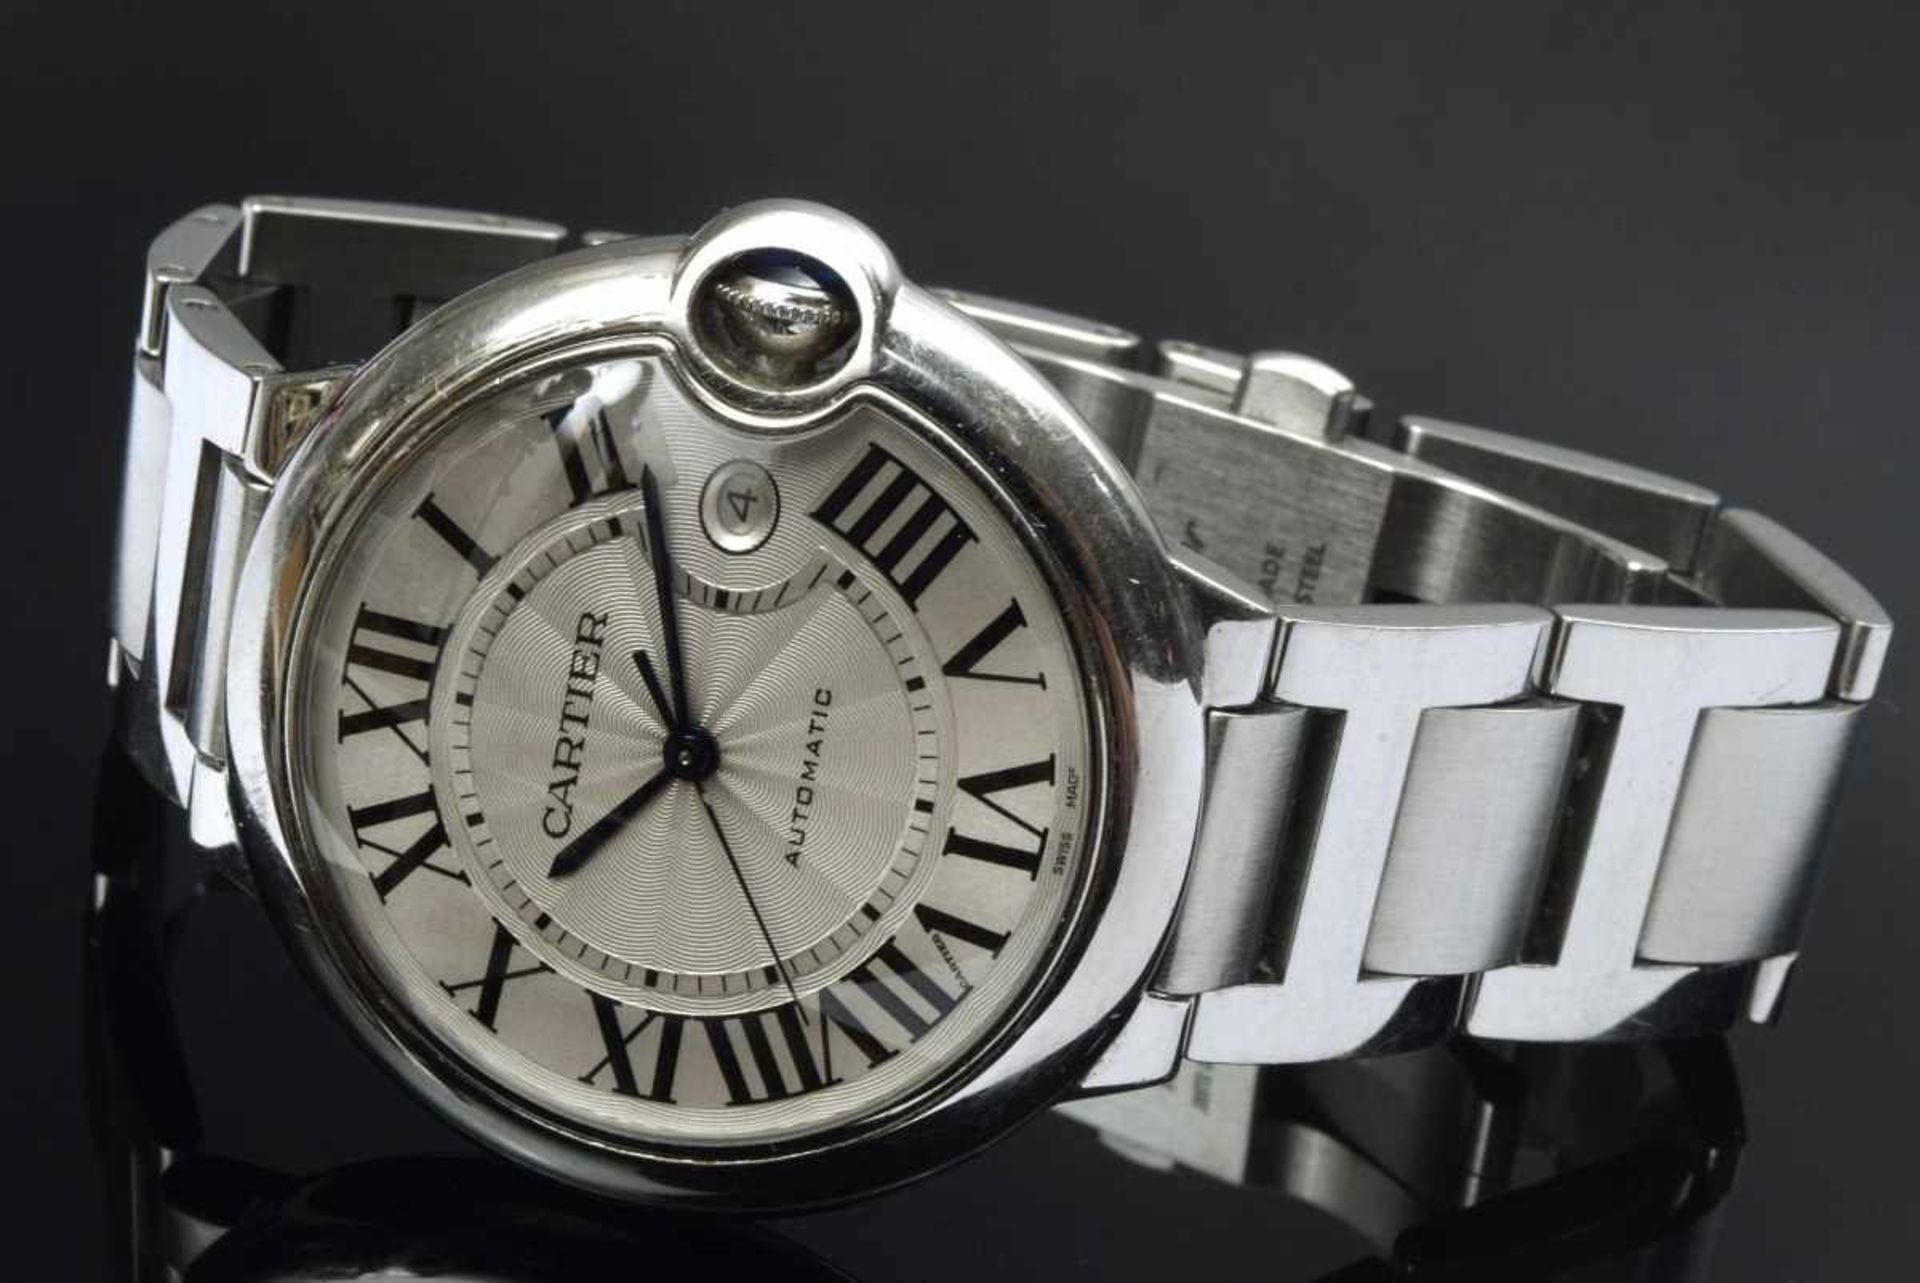 Cartier "Ballon Bleu" ladies' wristwatch, stainless steel, automatic movement, silver-coloured